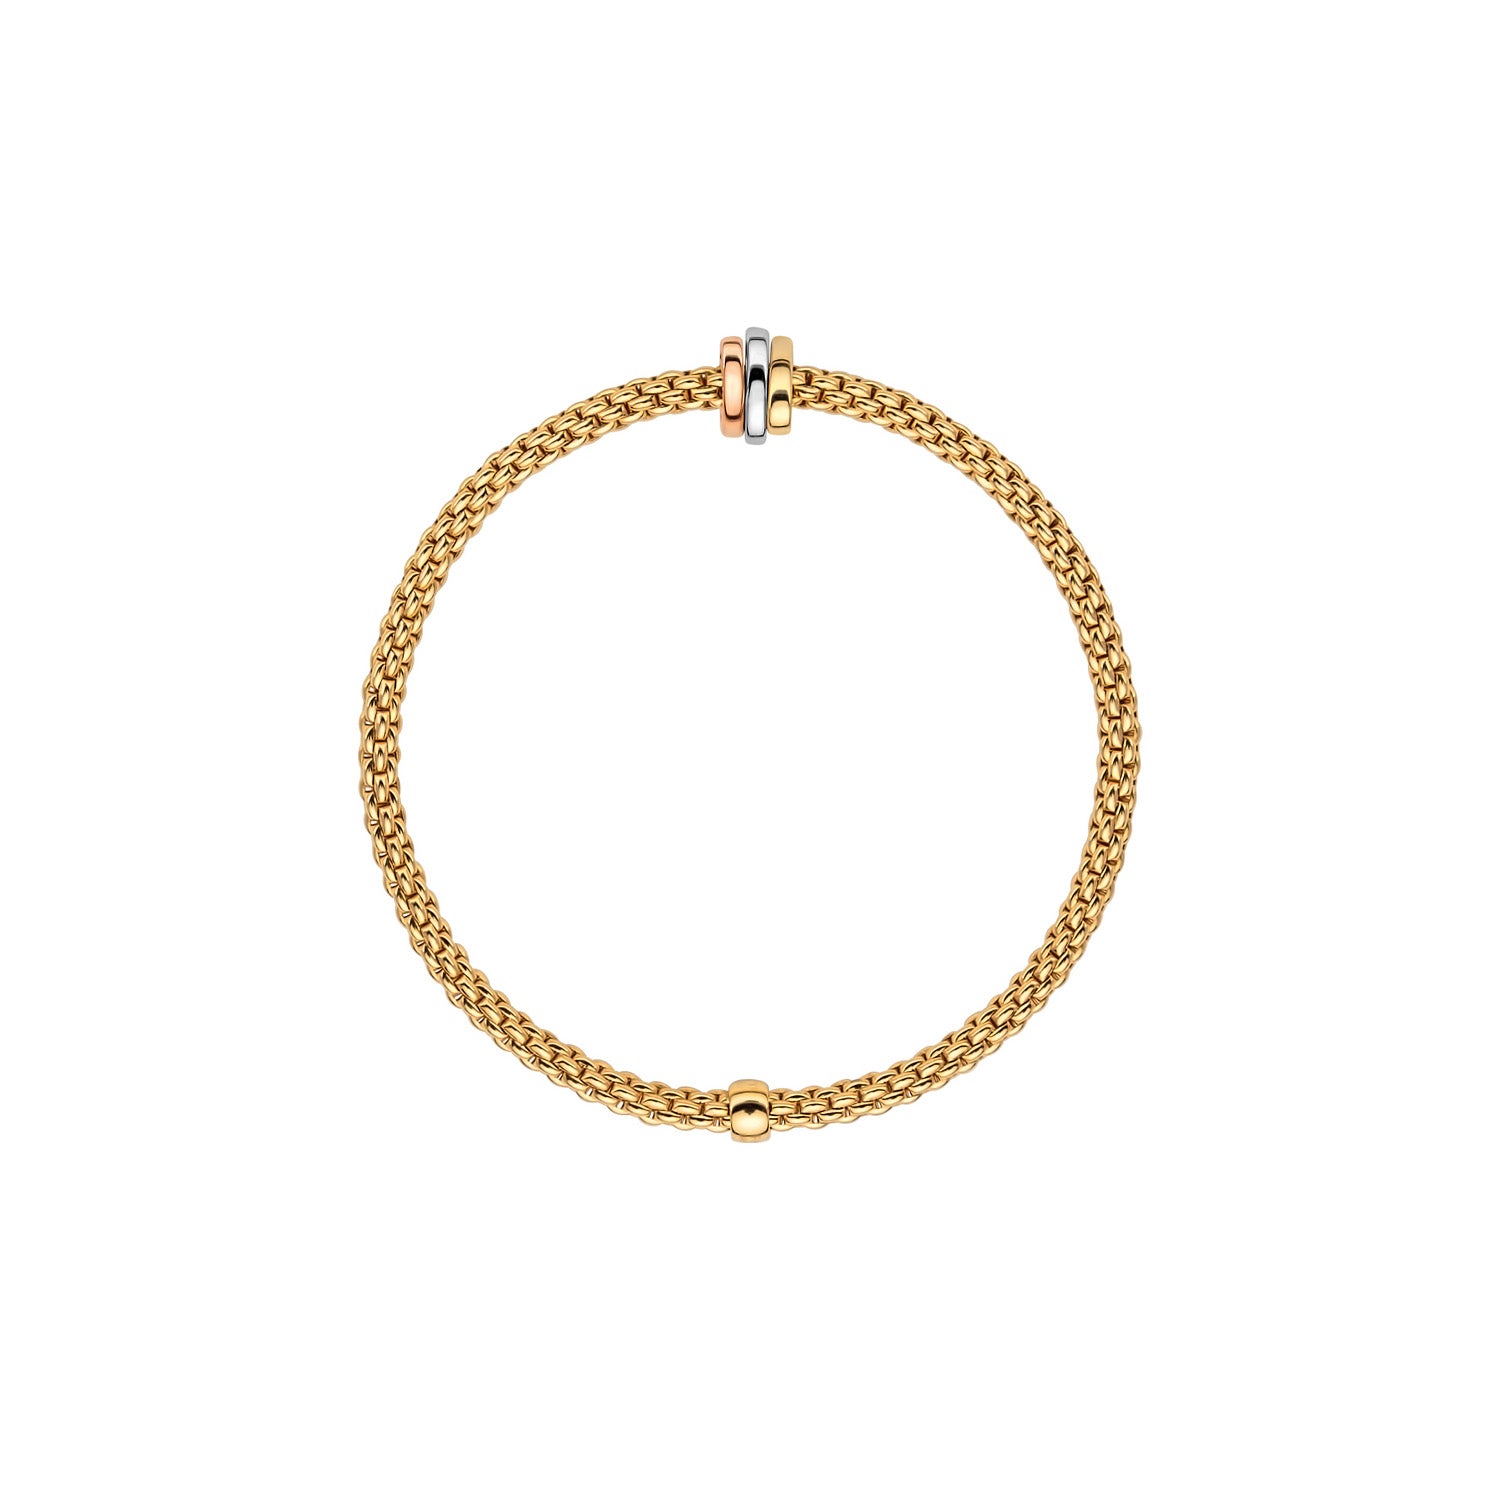 Flex'it Prima bracelet in yellow gold